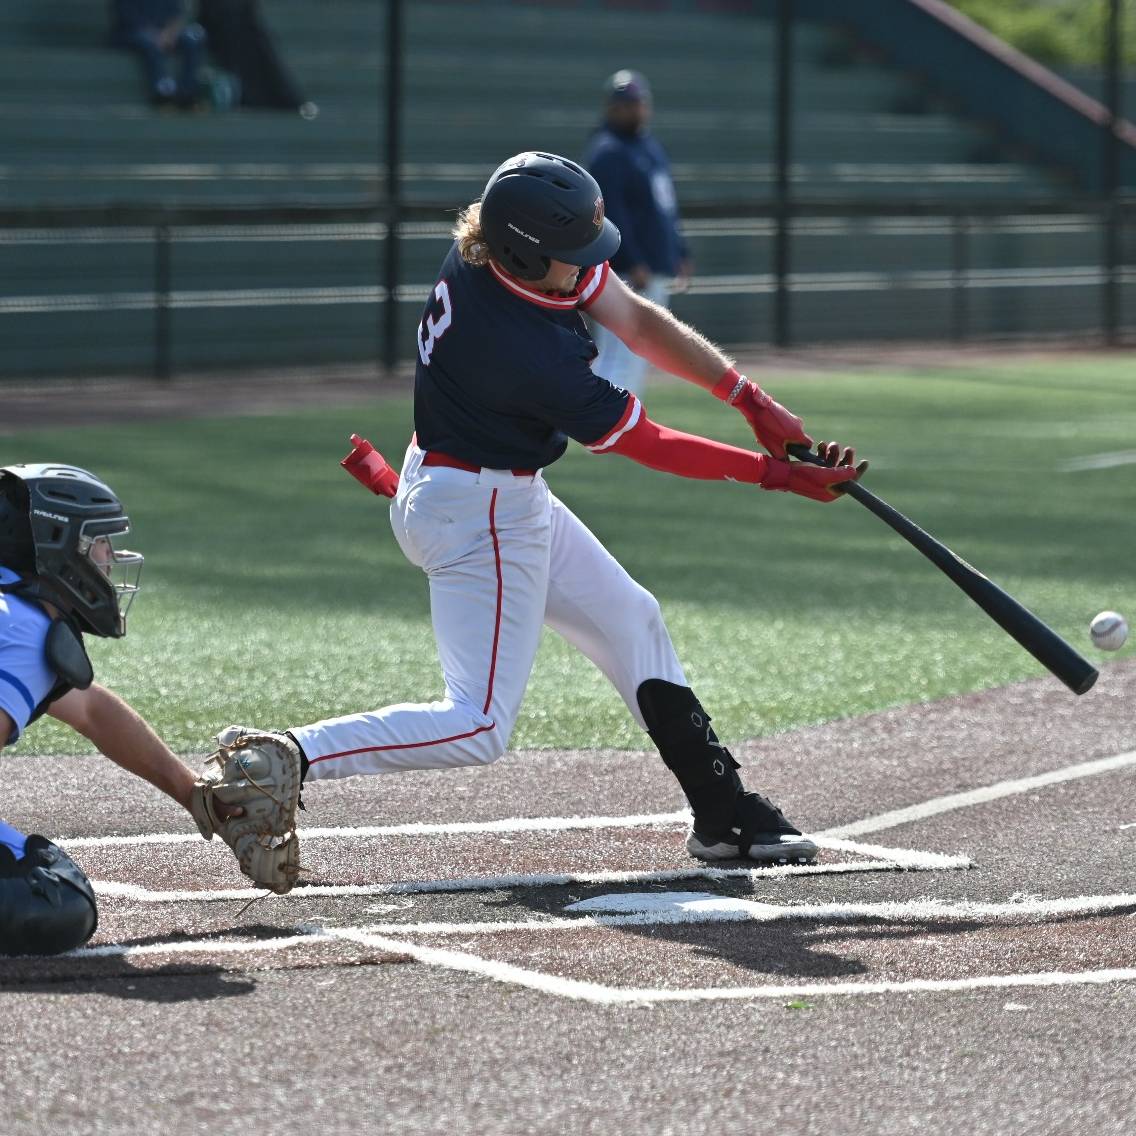 A baseball player swinging a bat on a field.